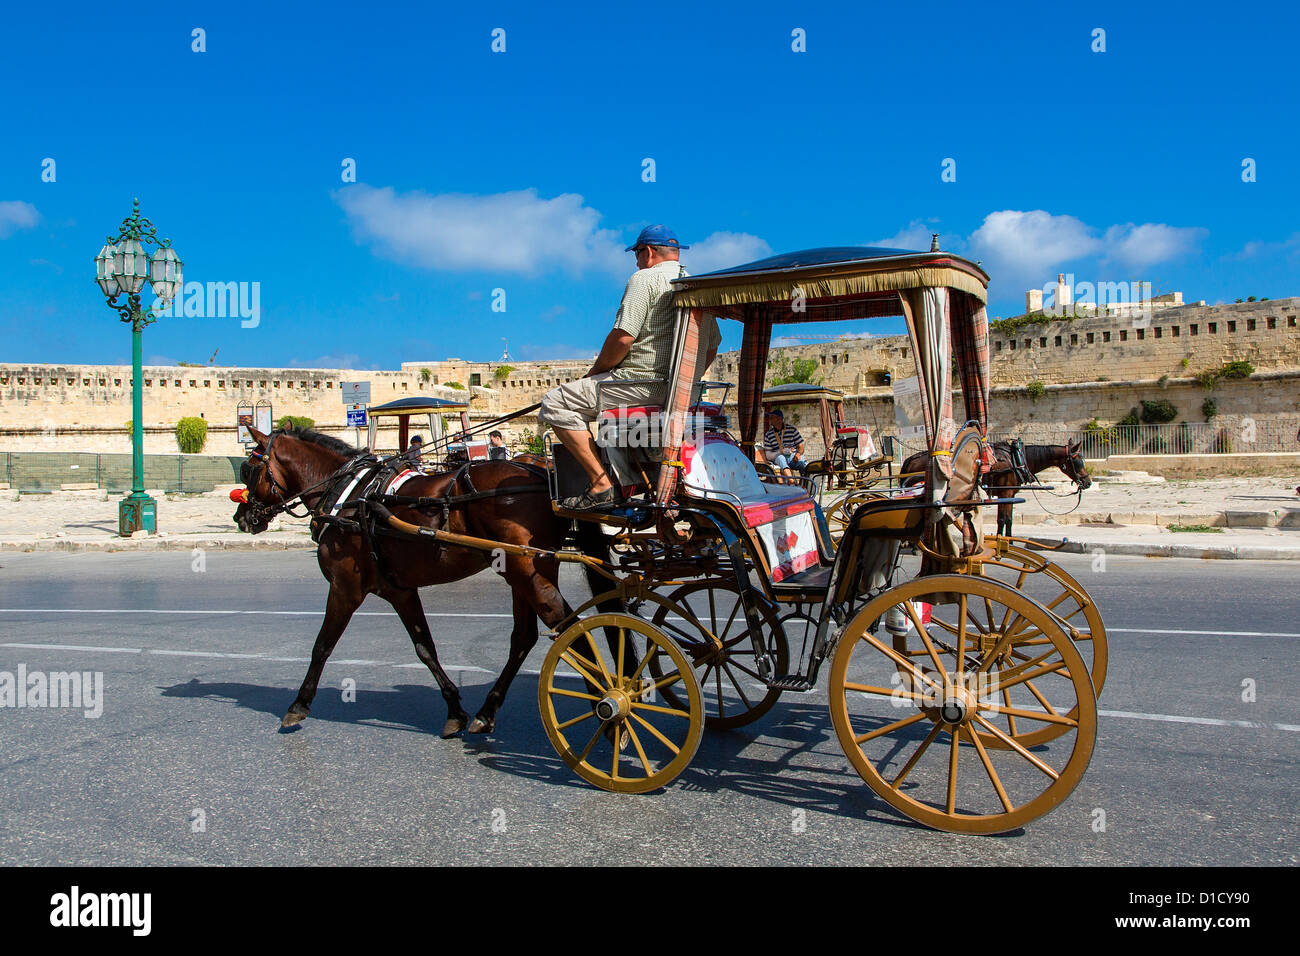 Horse-drawn carriage, Fort St. Elmo, Valletta, Malta, Europe Stock Photo